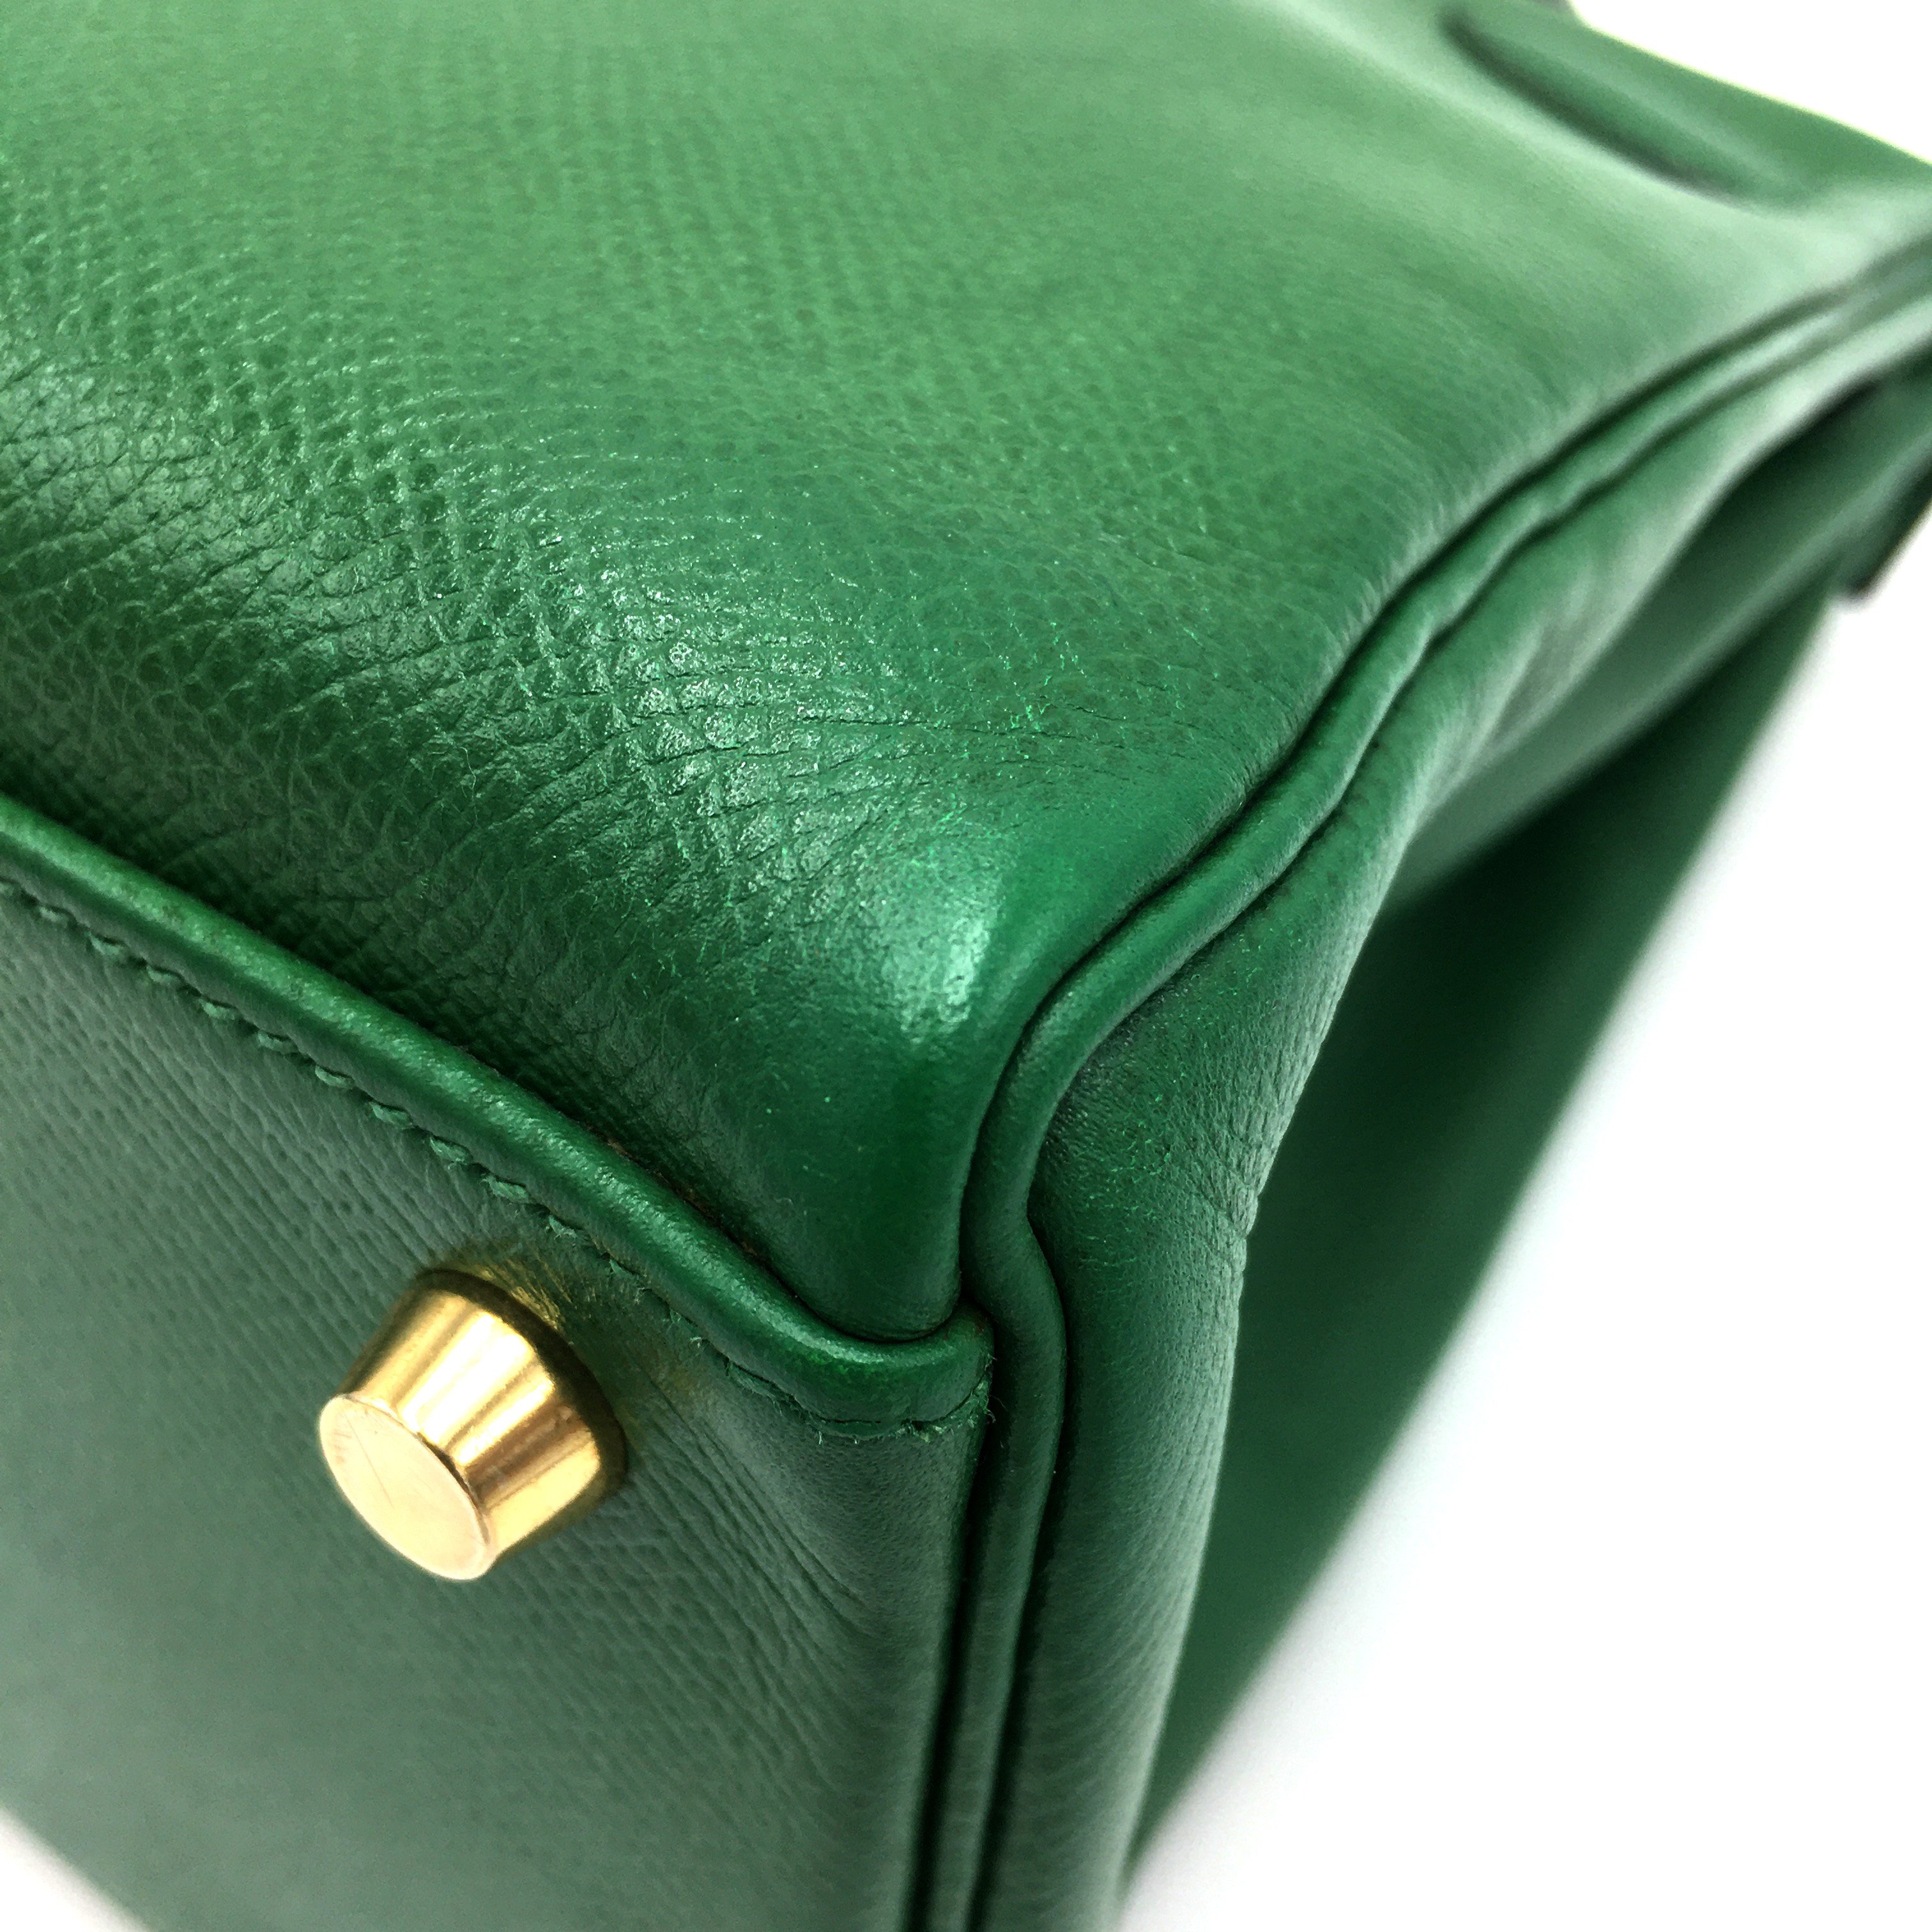 Kelly 32 leather handbag Hermès Green in Leather - 34193694